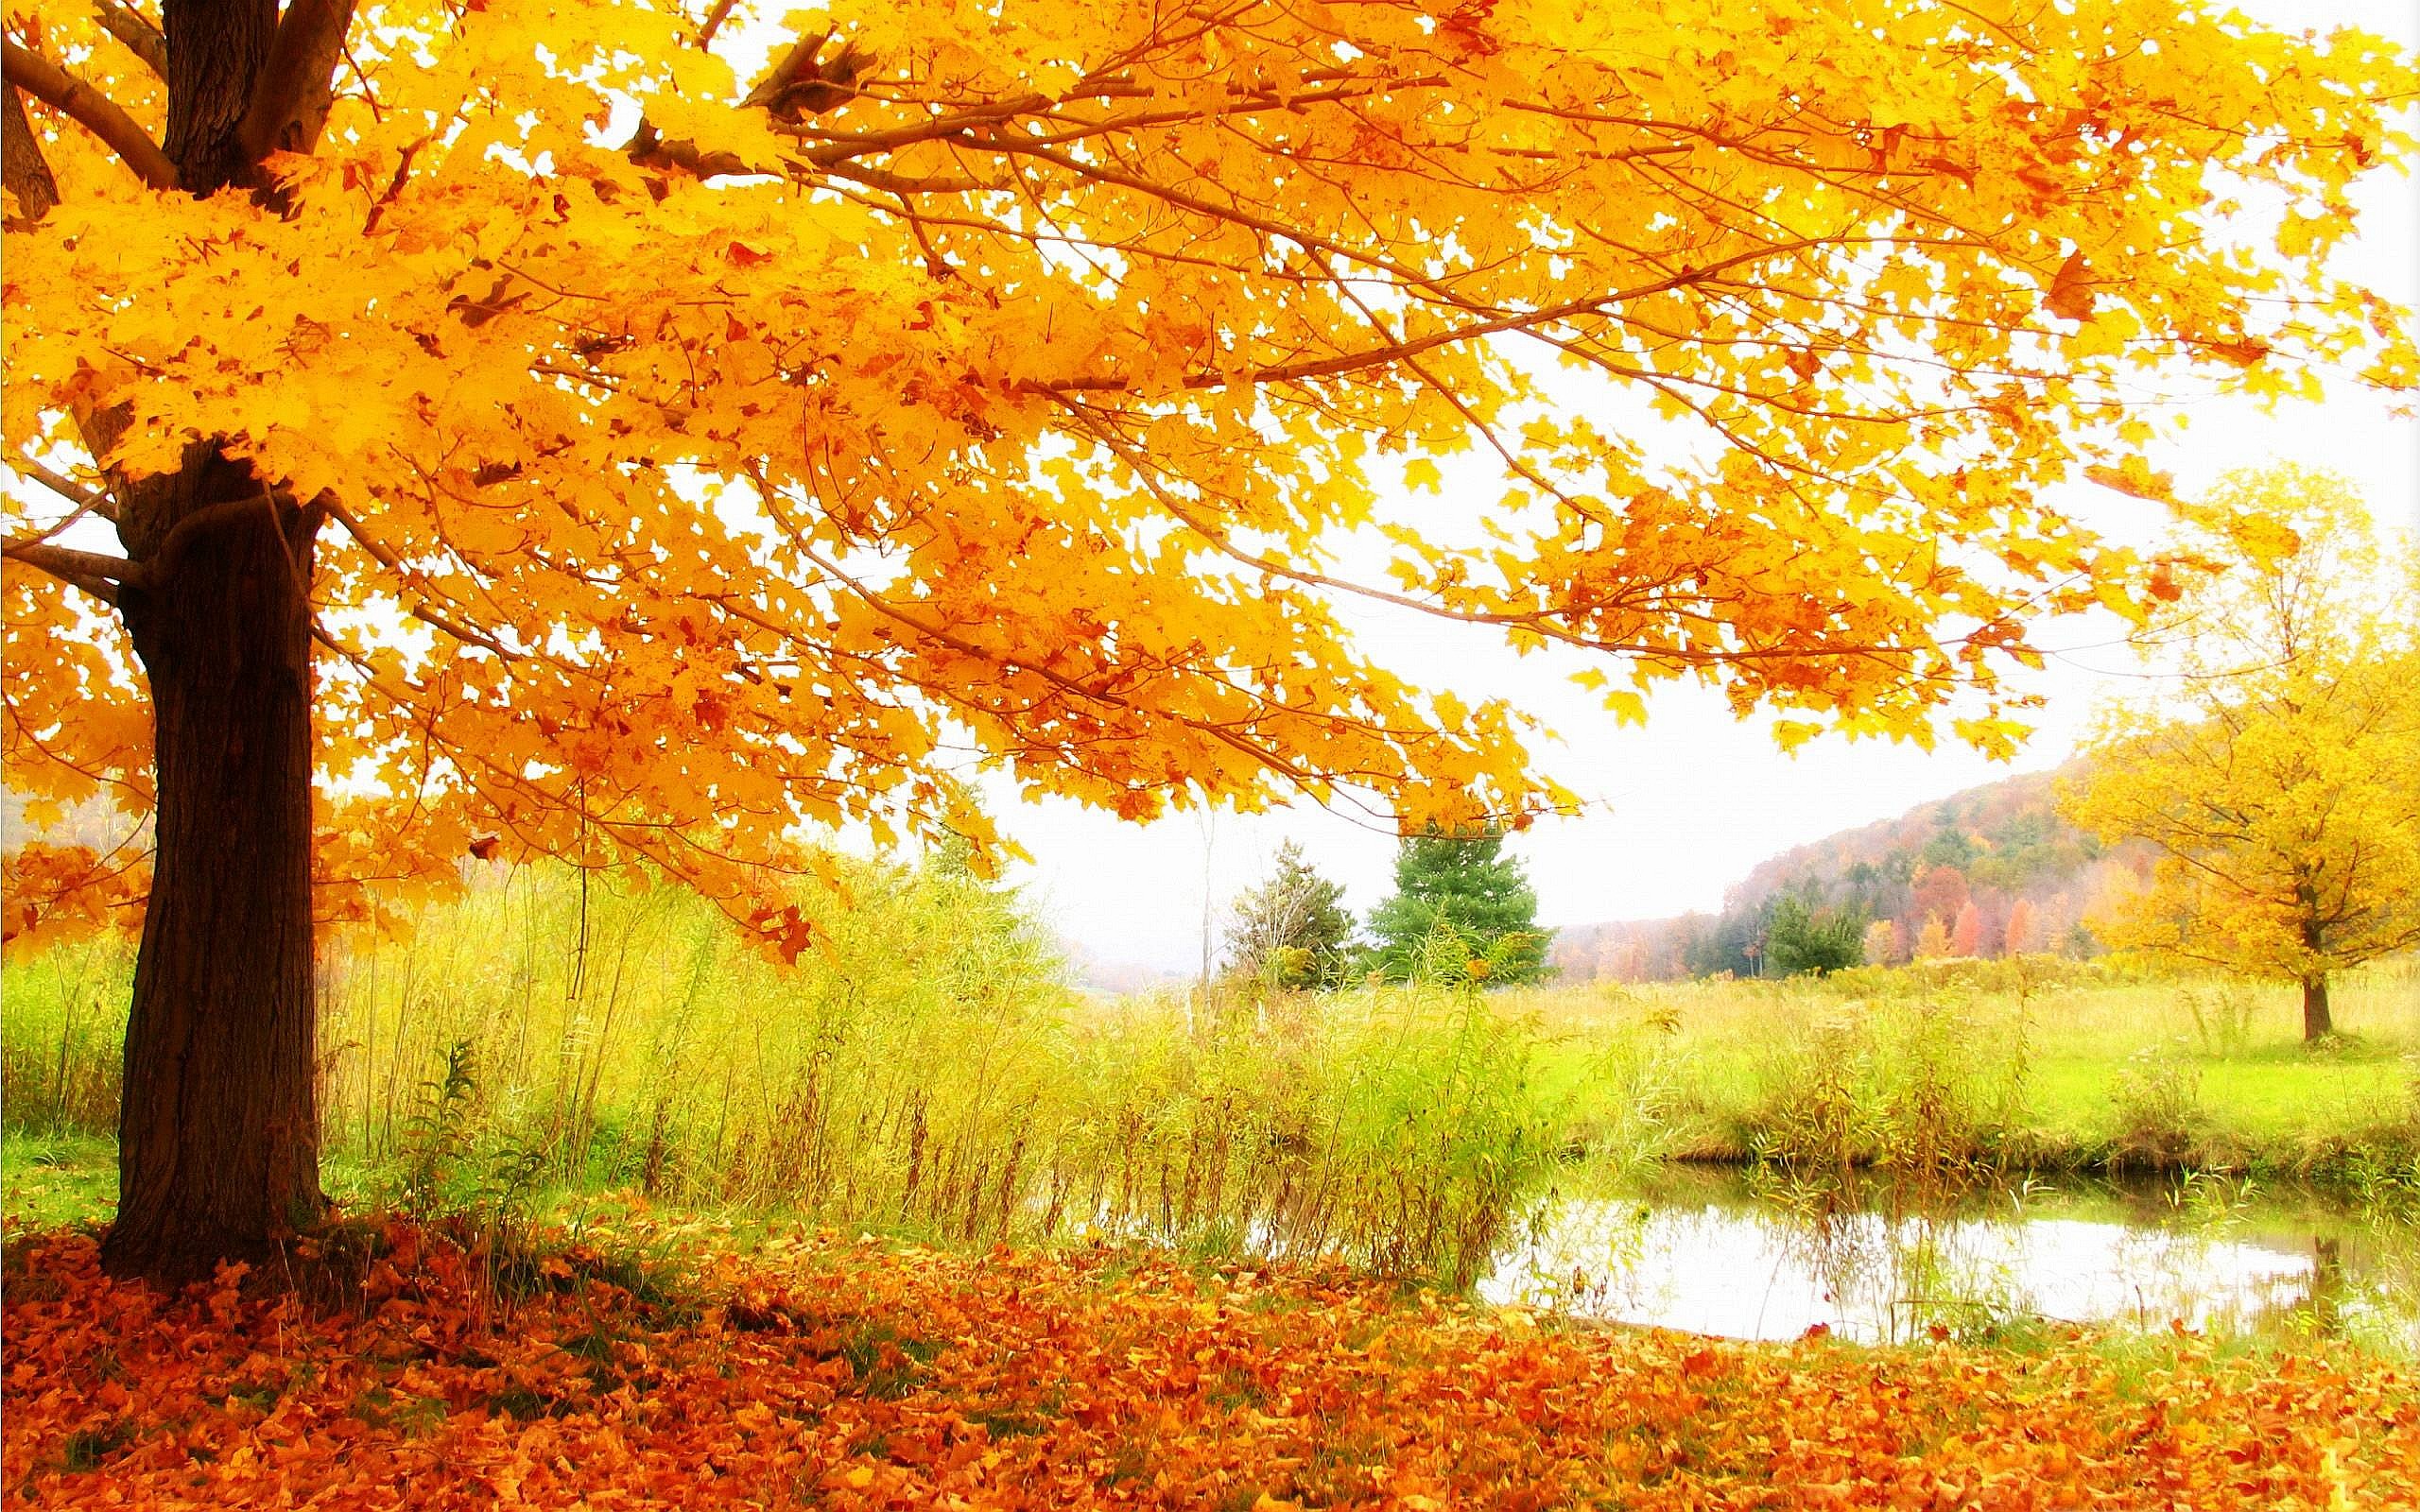 HD Autumn Scenery Wallpaper - HD Wallpapers